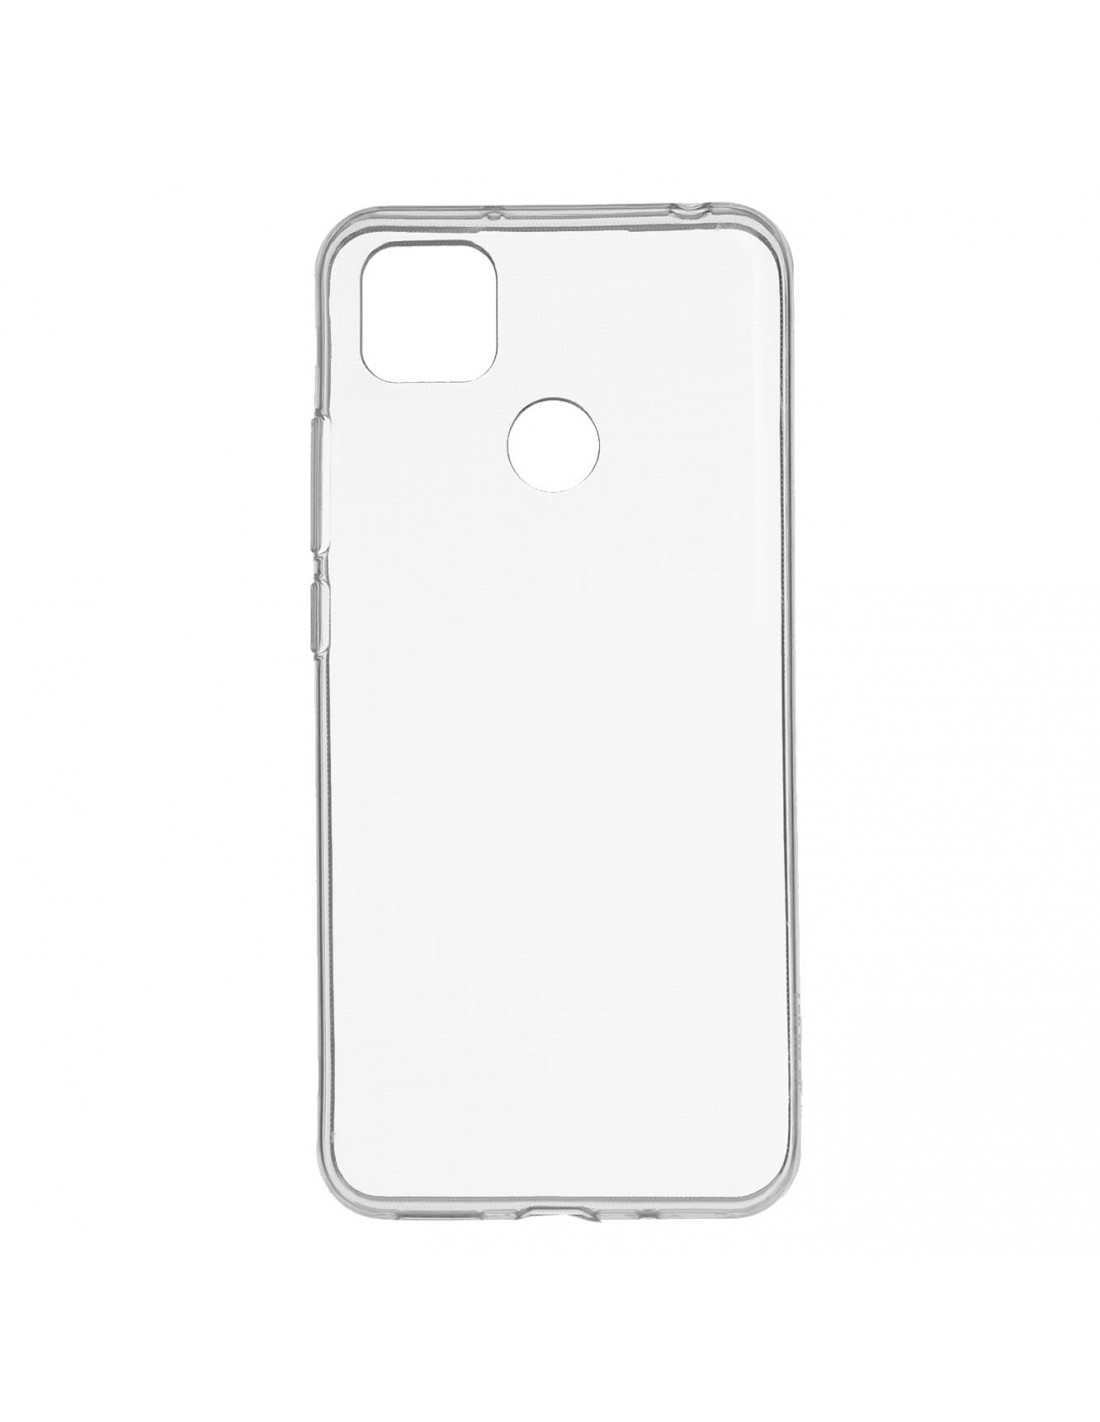 Personaliza tu Funda [Xiaomi Redmi 9C] de Silicona Flexible Transparente  Carcasa Case Cover de Gel TPU para Smartphone